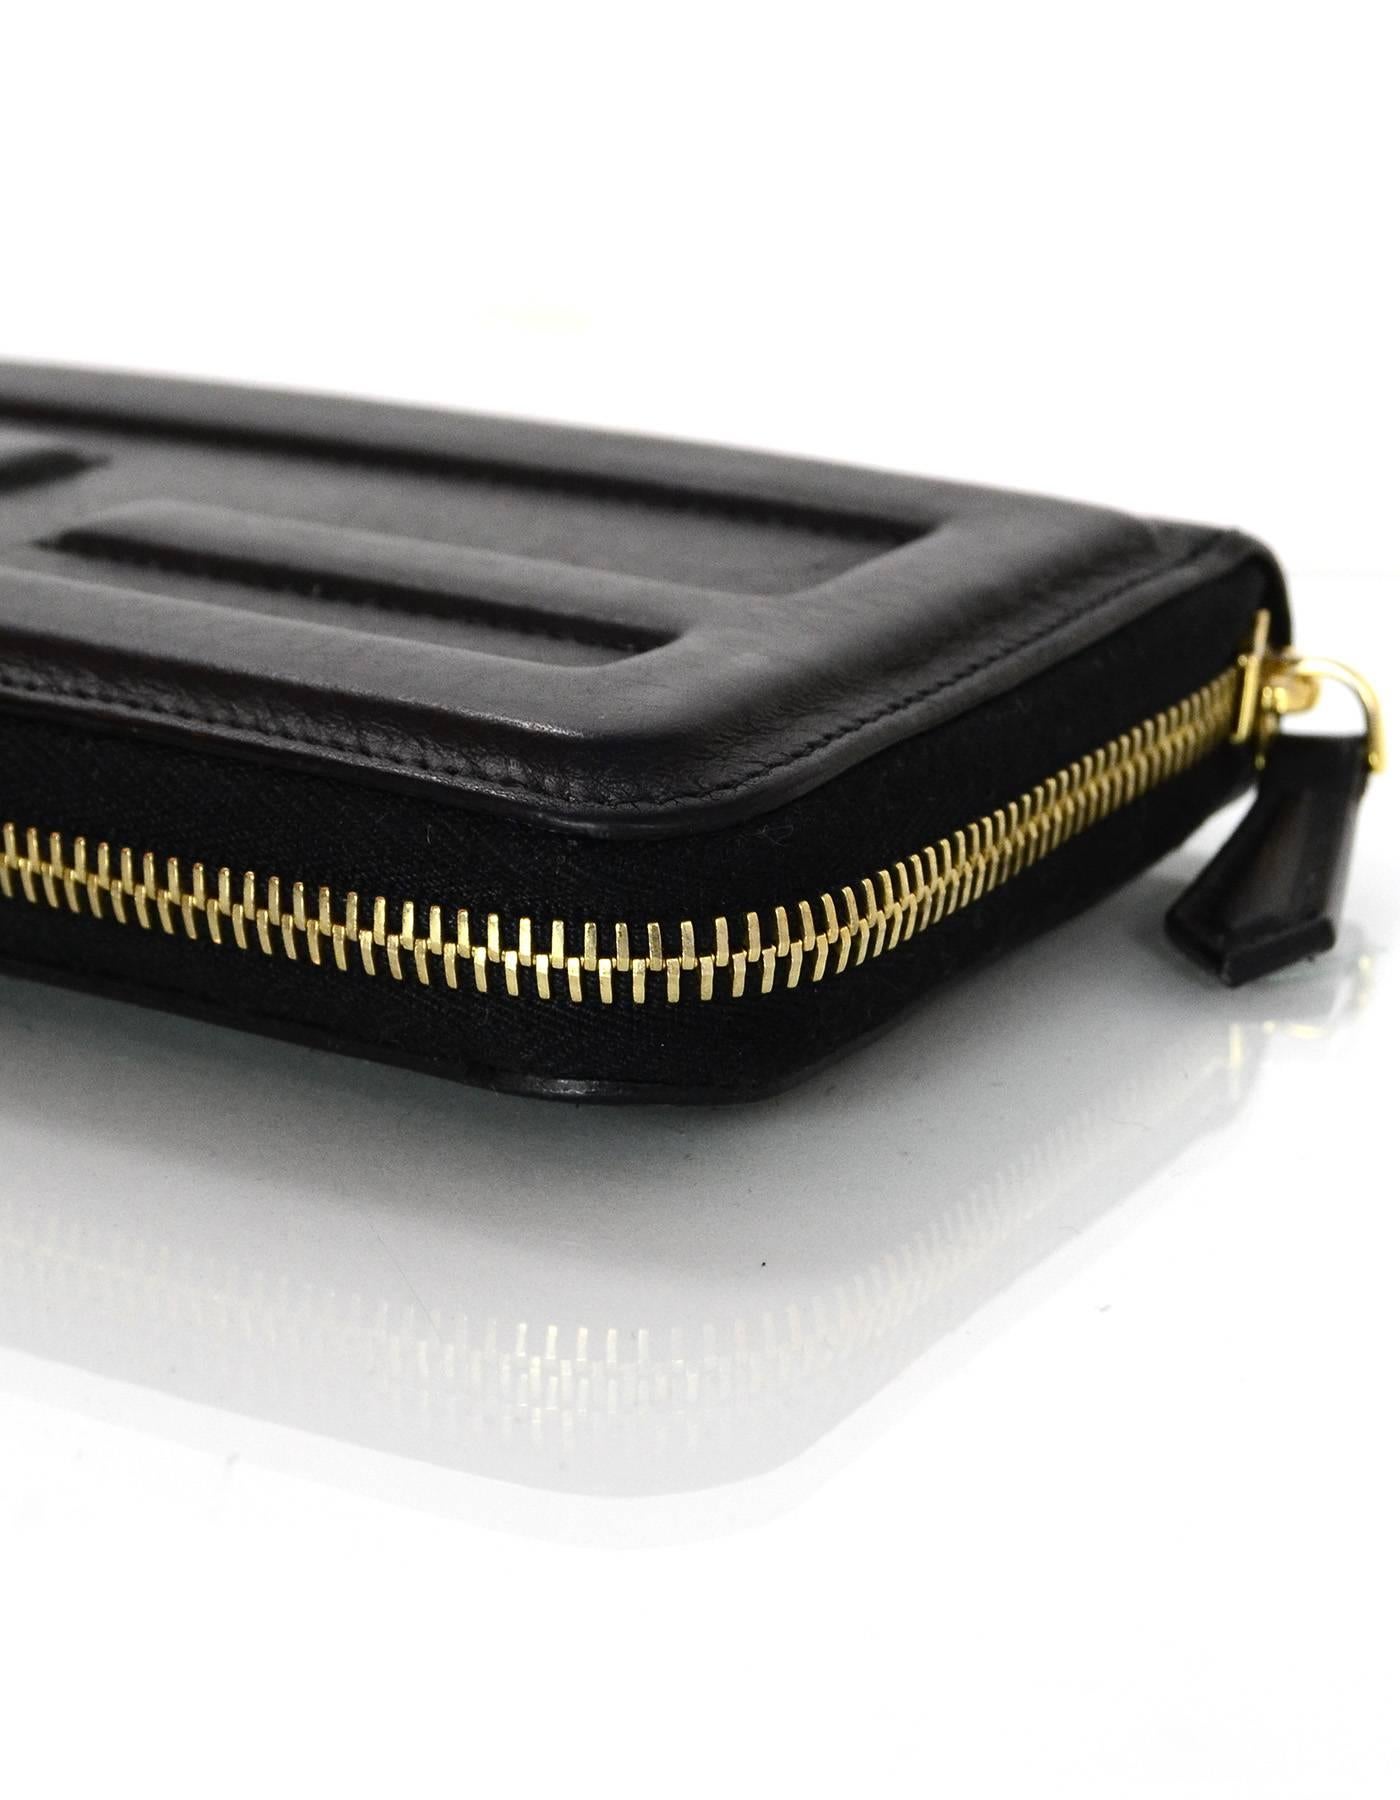 Women's Fendi 2016 Black Leather Logo Zip Around Wallet GHW rt $650